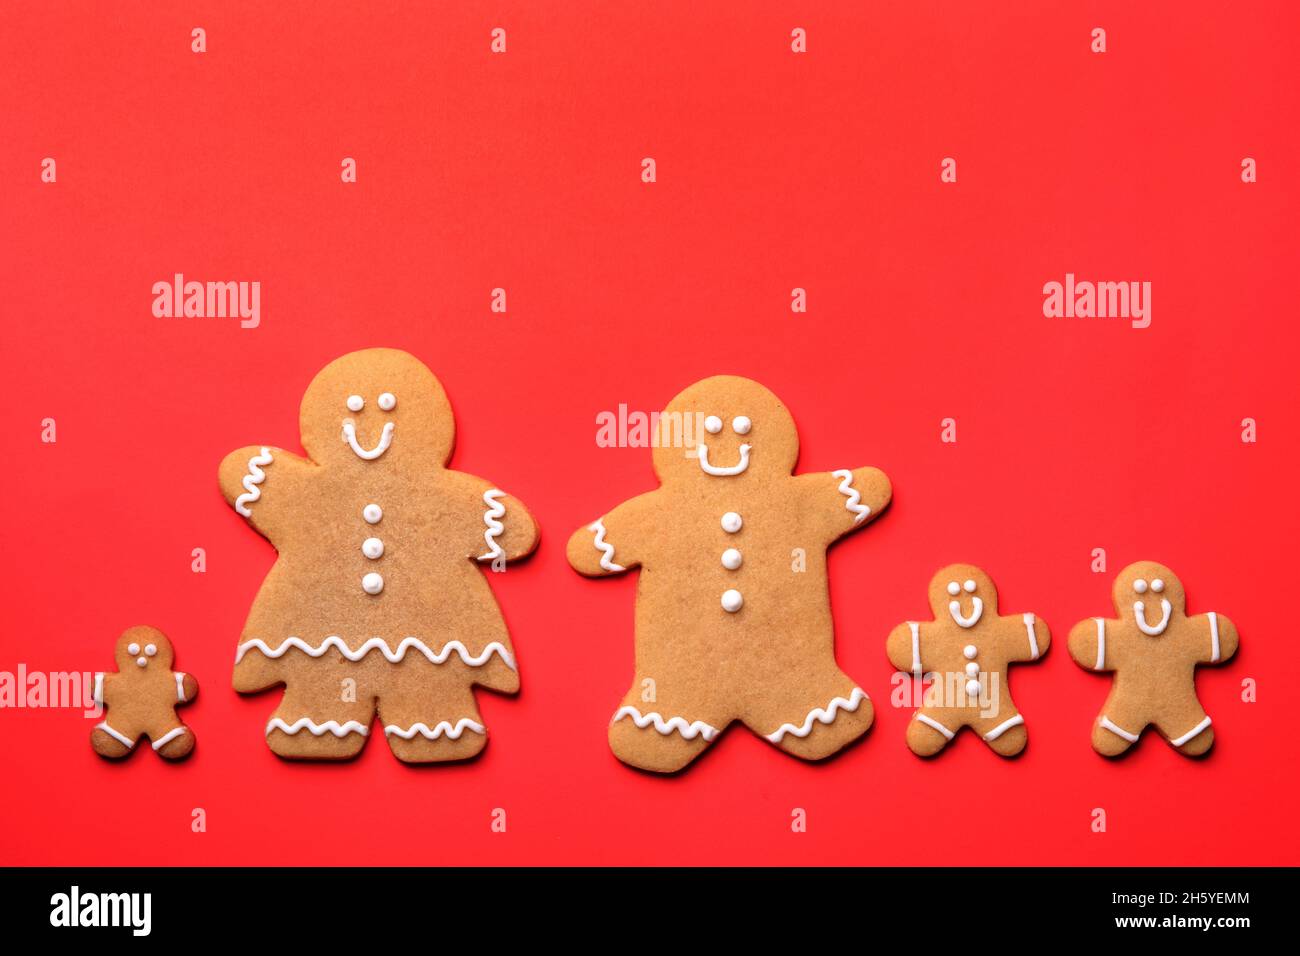 Familia de pan de jengibre en un fondo festivo de Navidad Foto de stock